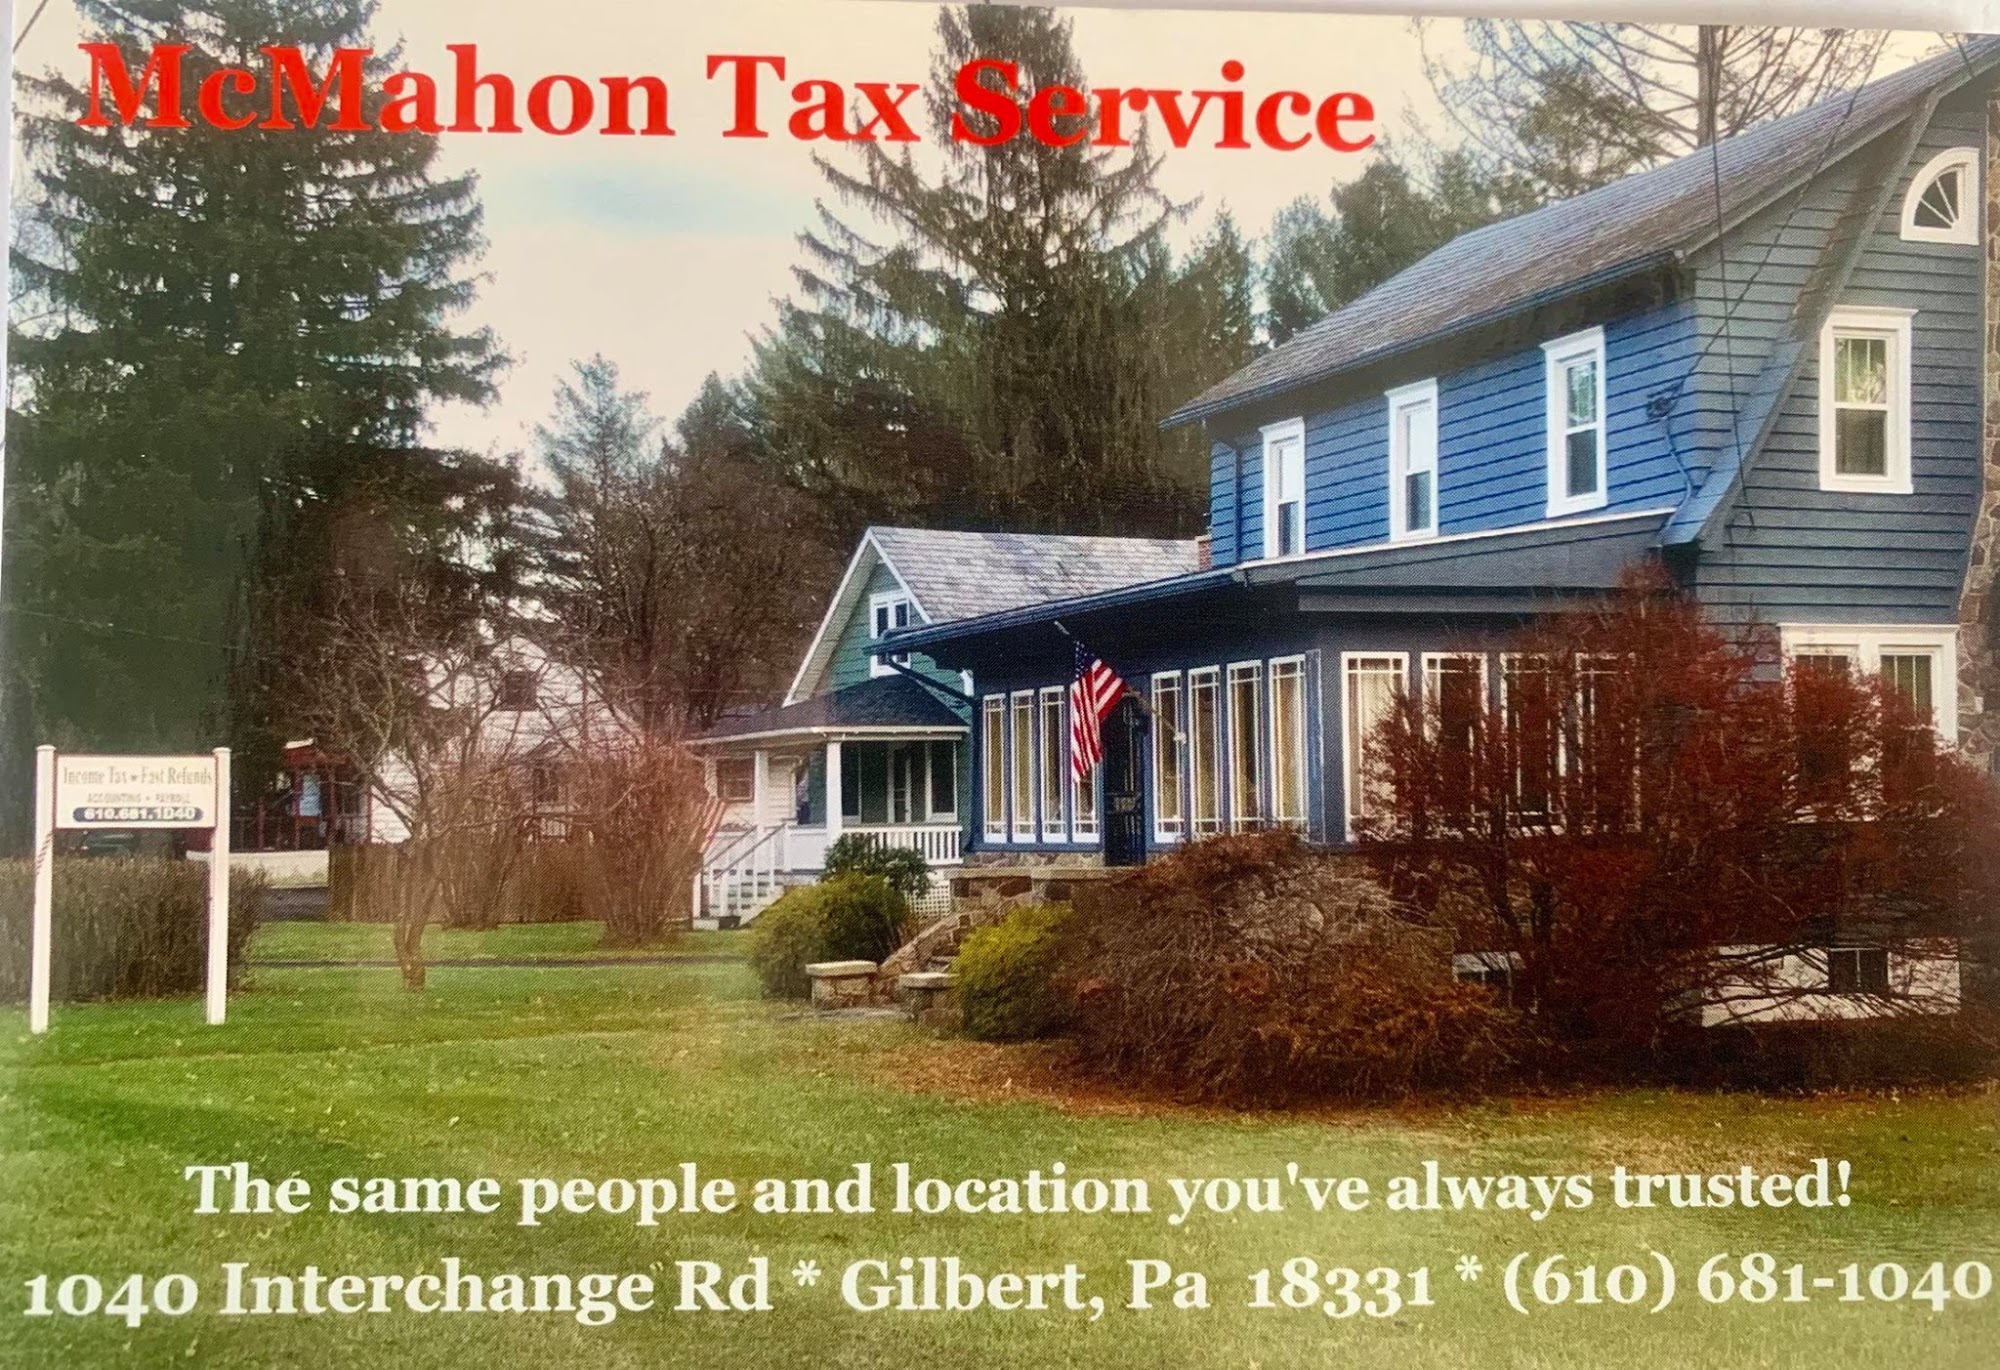 McMahon Tax Service